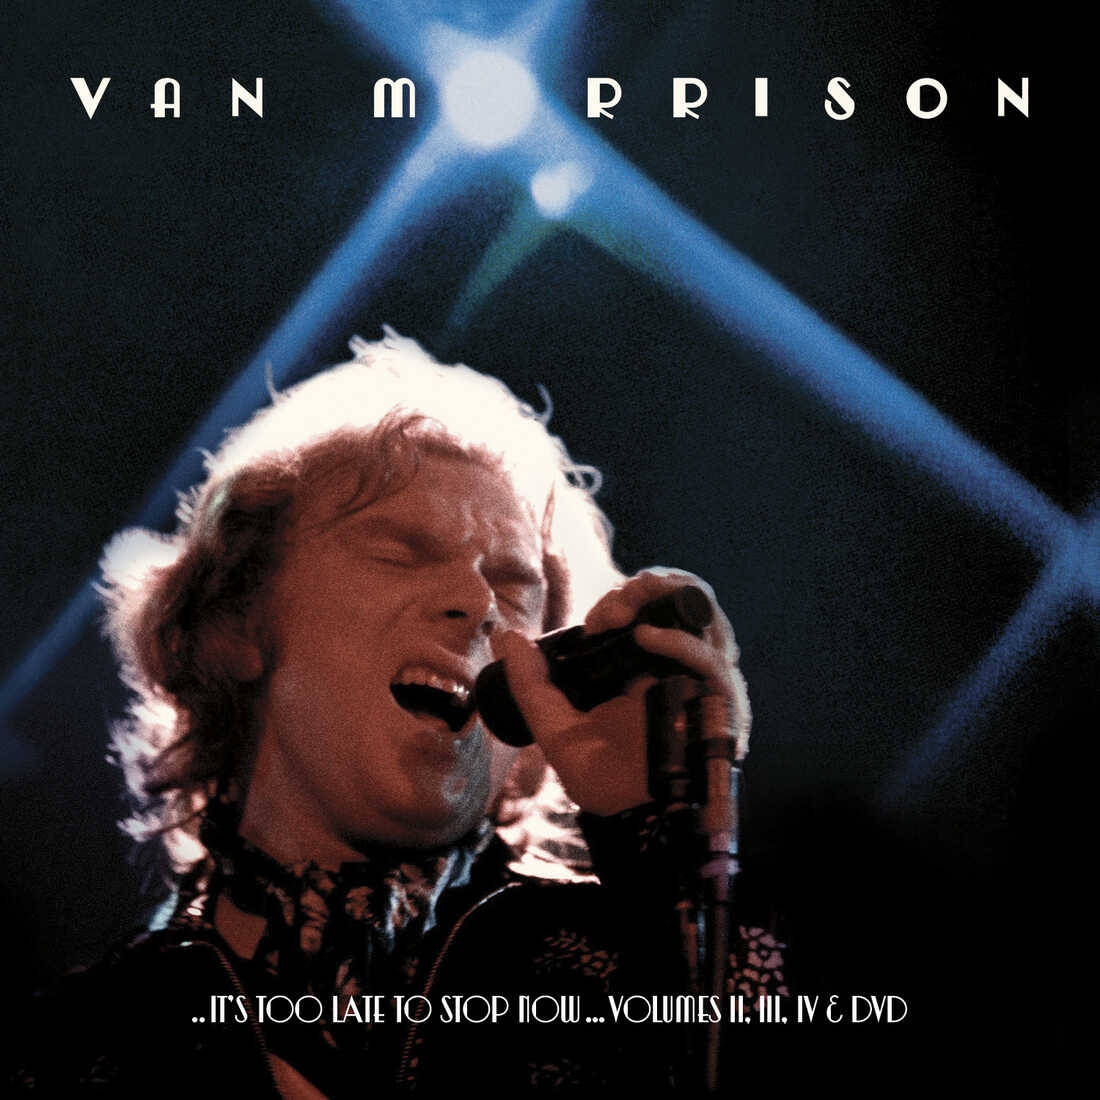 Van Morrison Dvd Album Cover Wallpaper